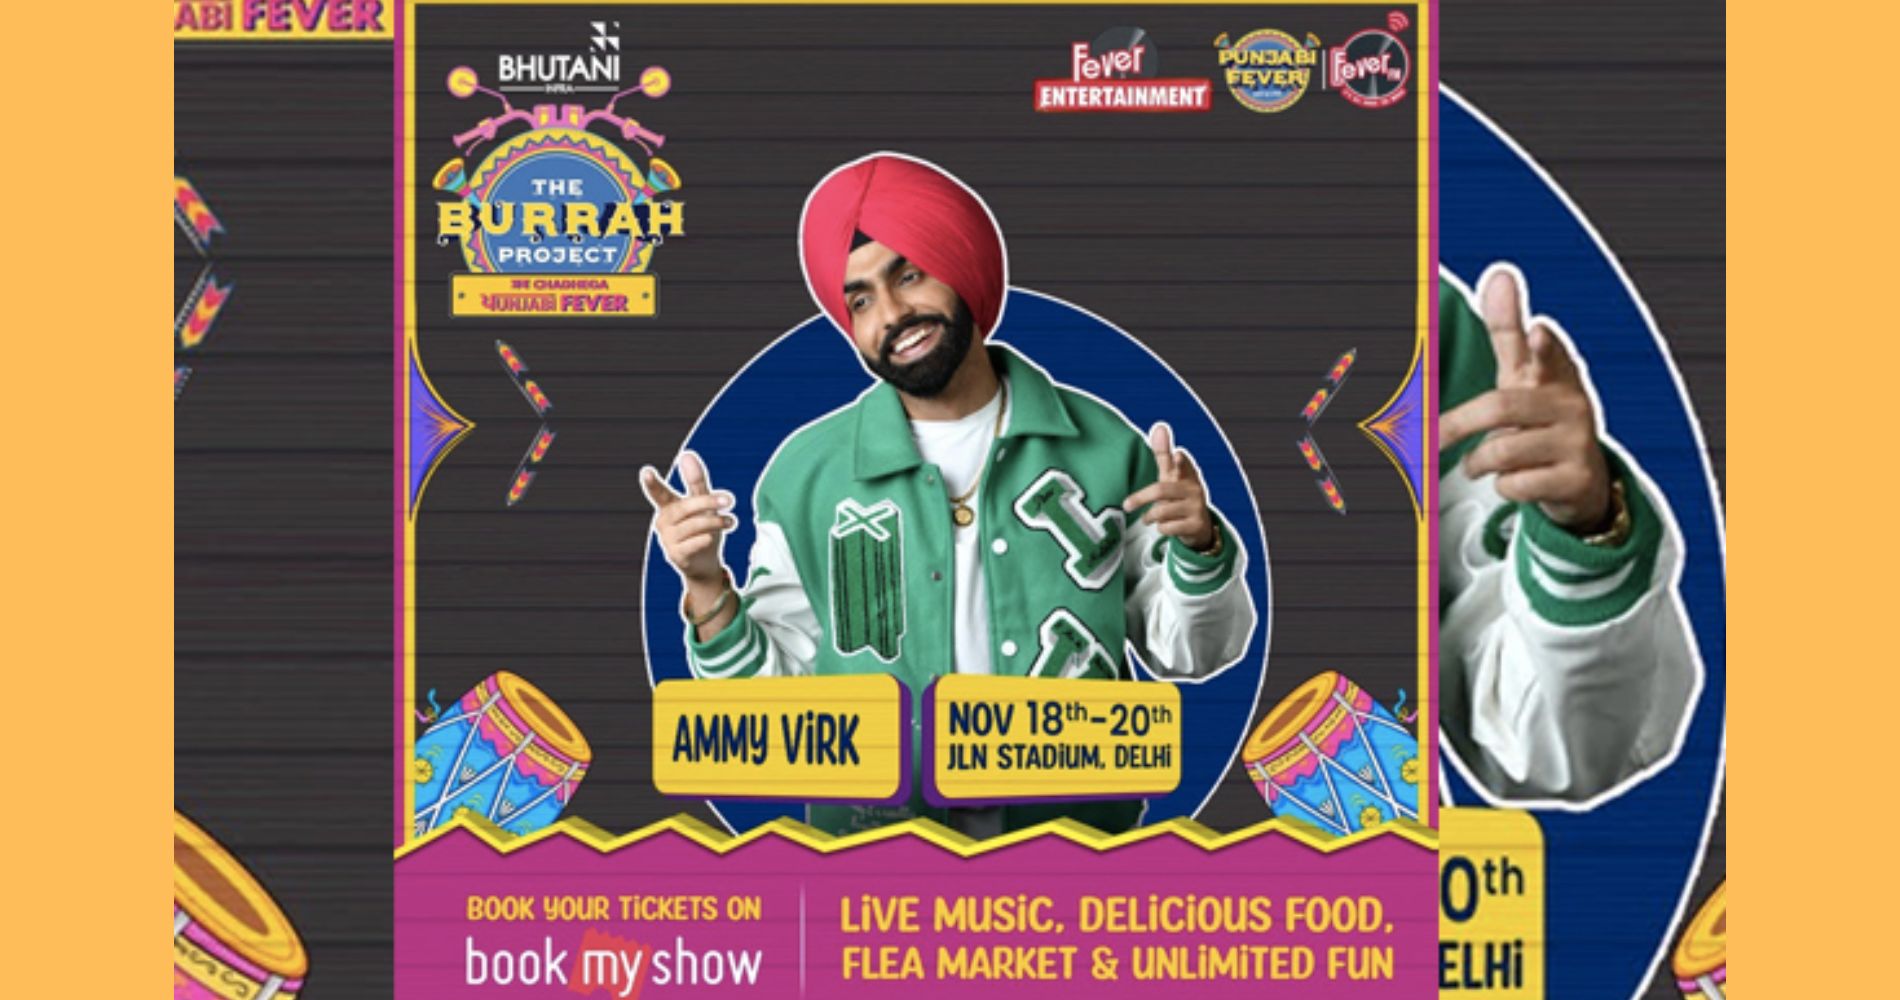 Delhi is all set to witness the biggest Punjabi music and food festival, 'The Burrah Project: Ab Chadhega Punjabi Fever'